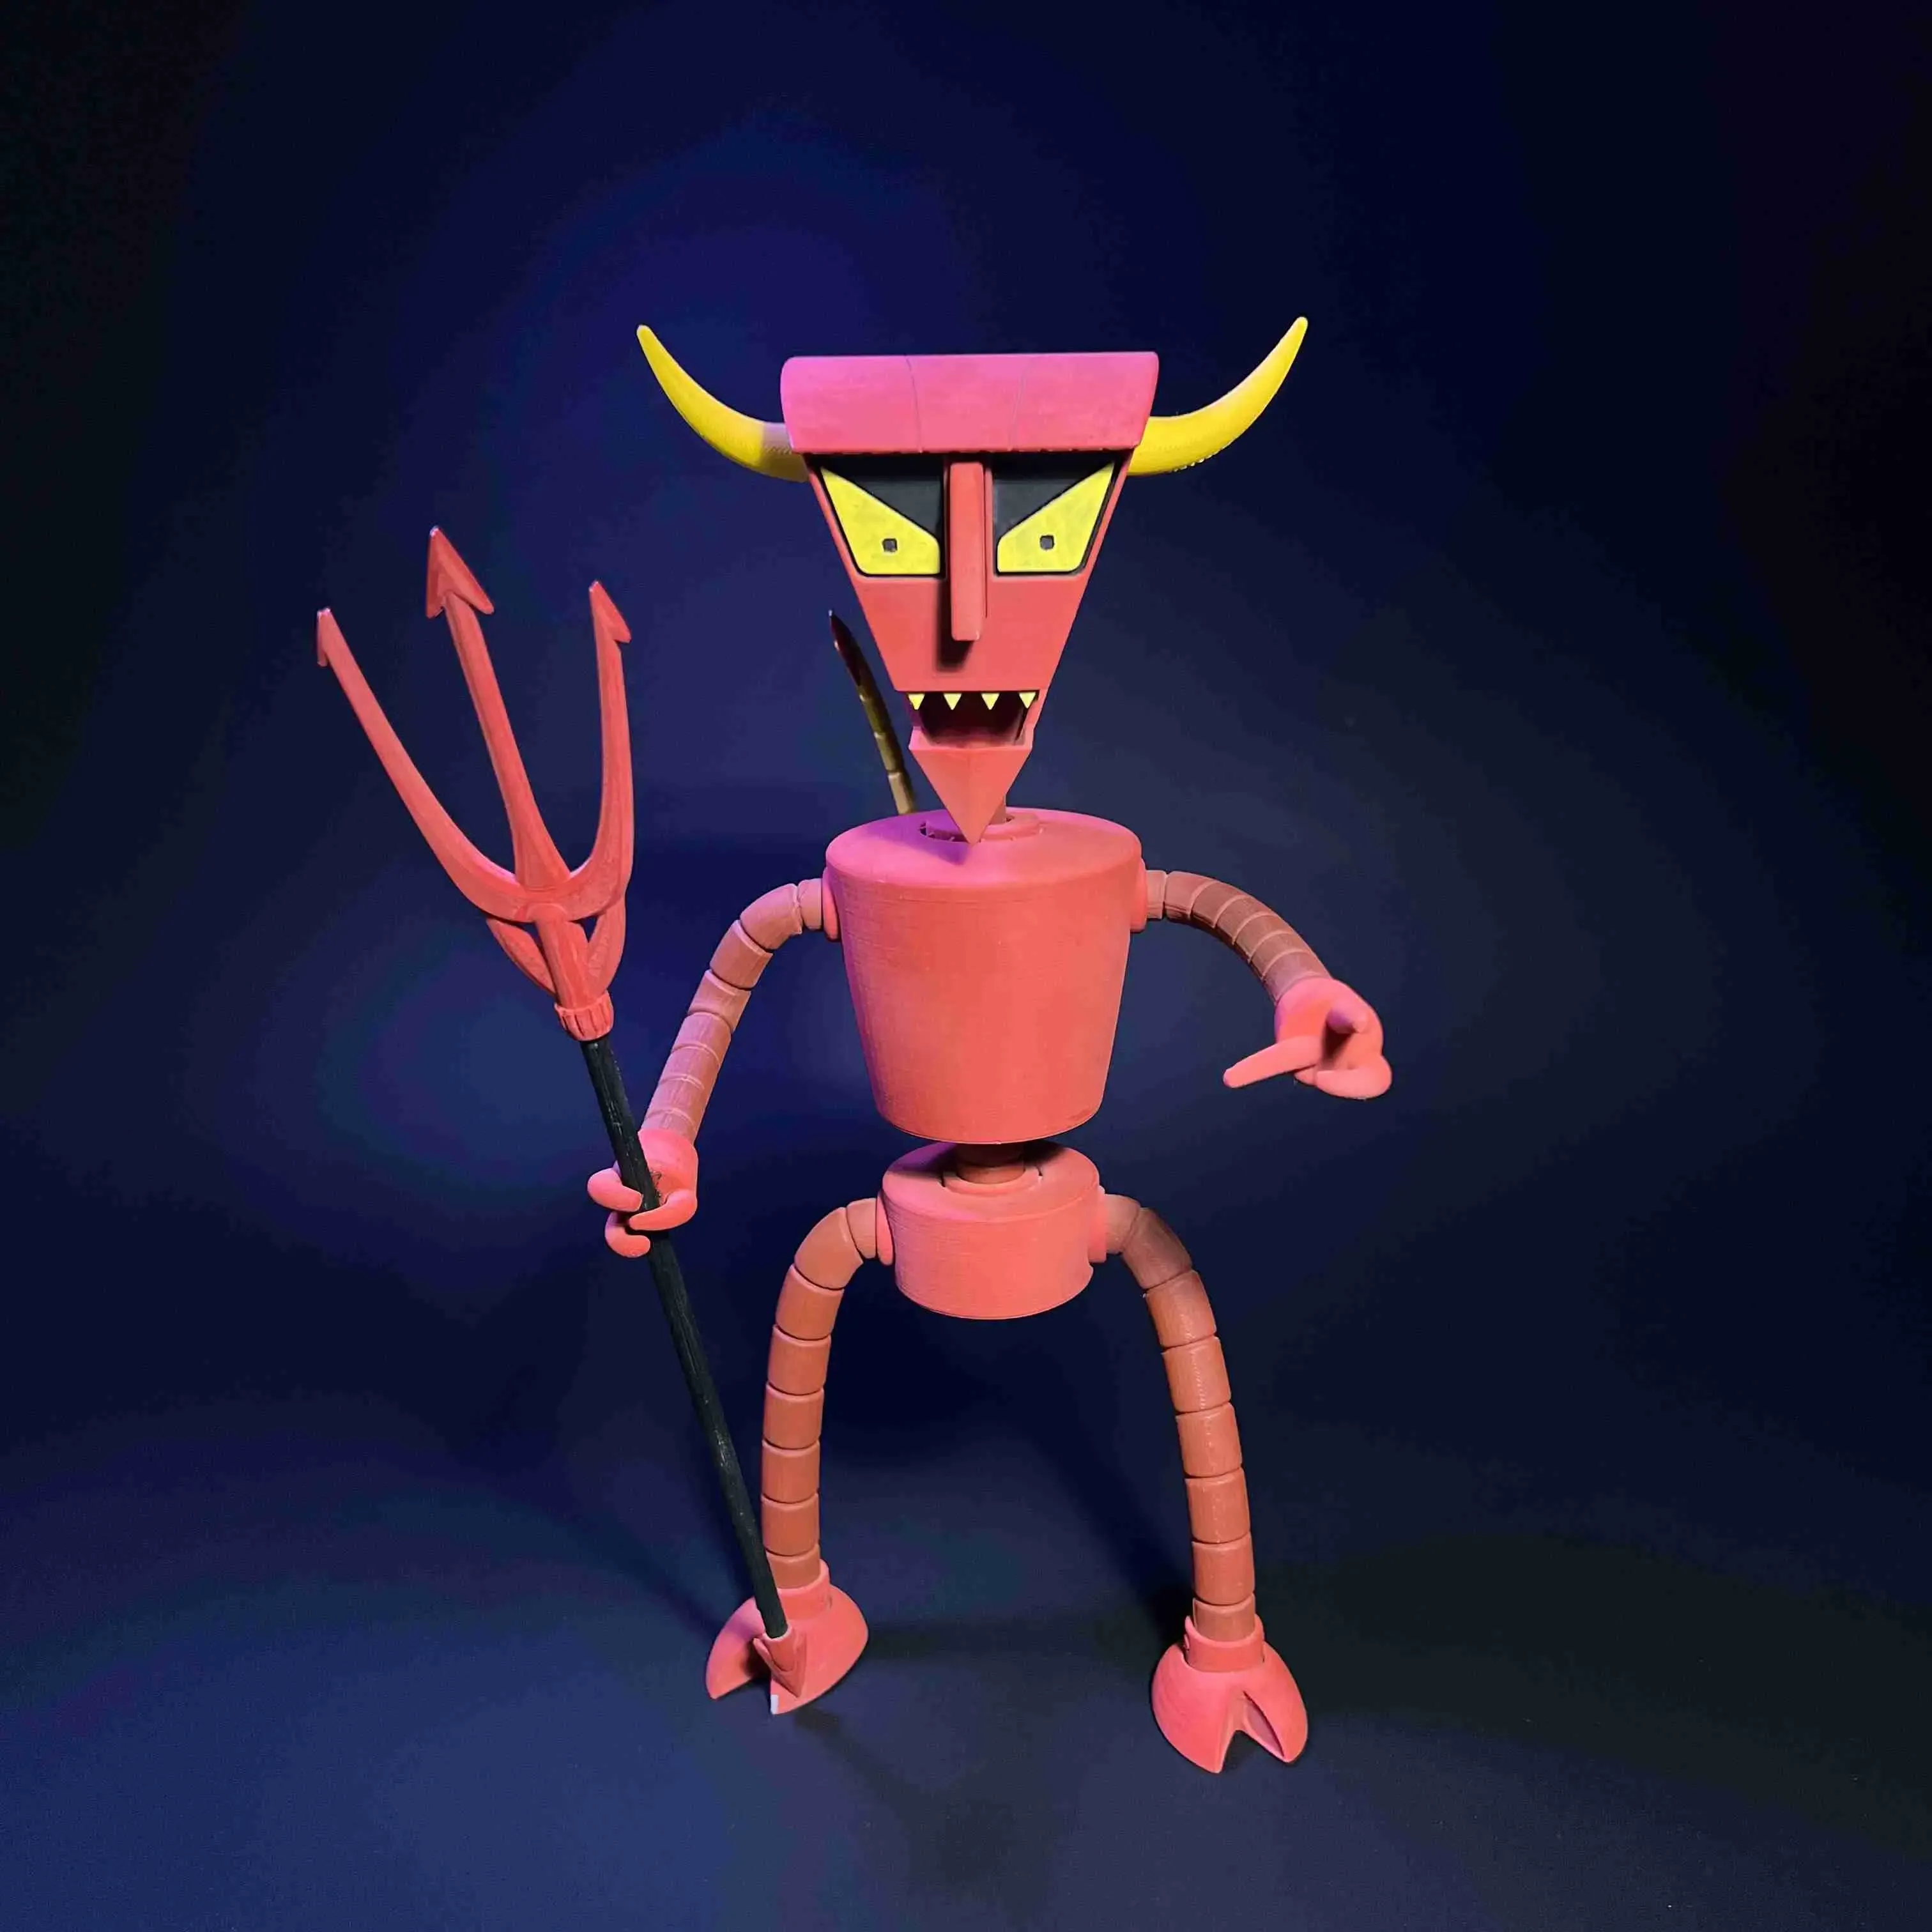 FUTURAMA 3D: Beelzebot (high detailed) Robot Devil